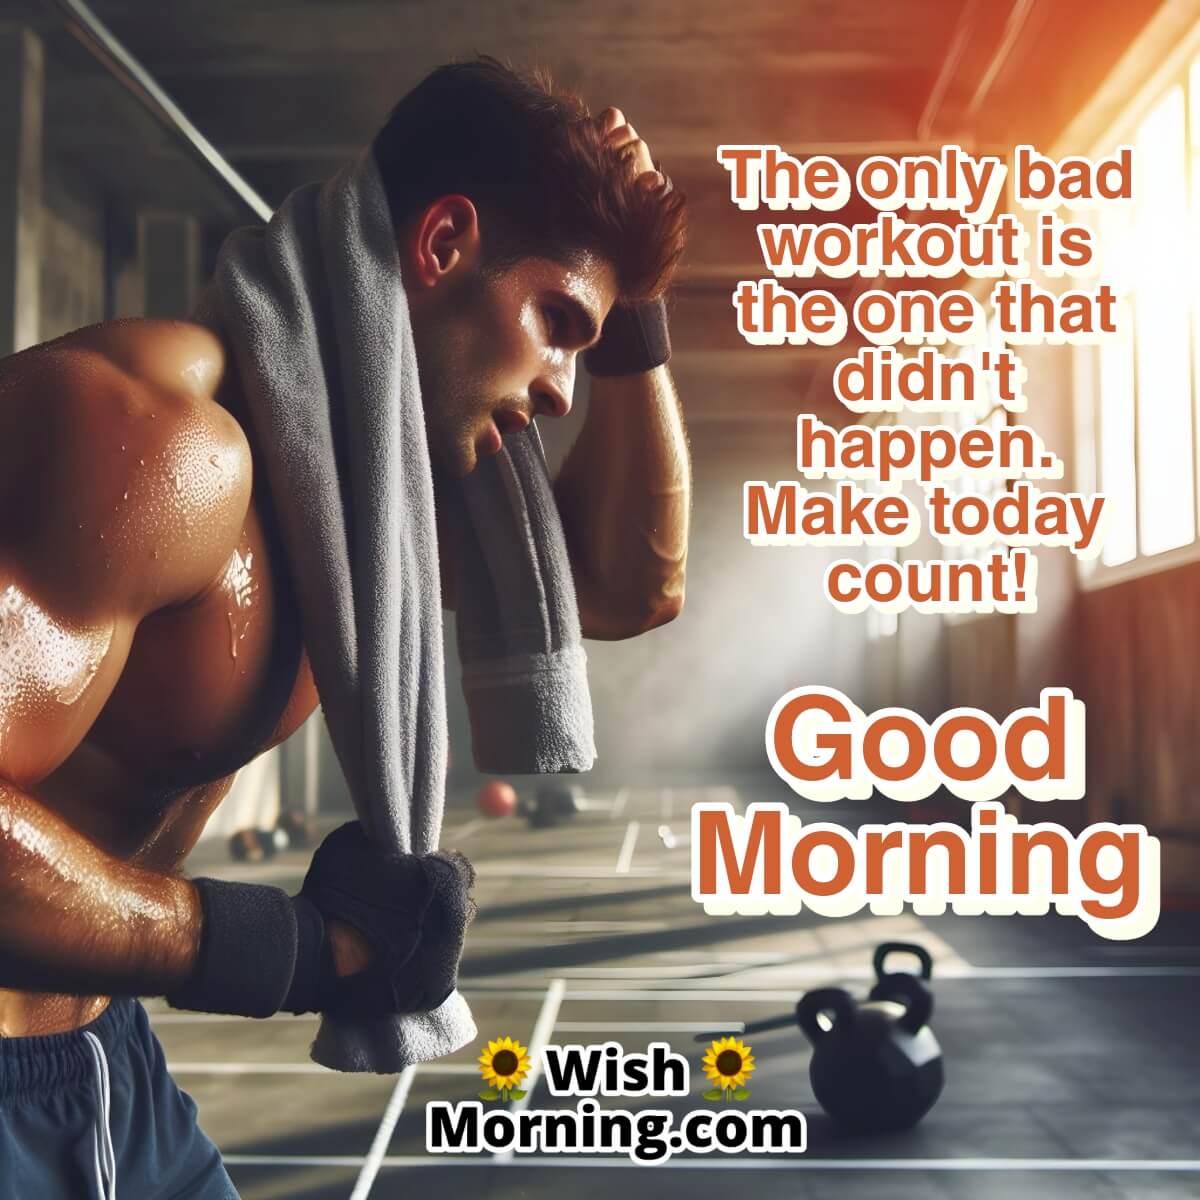 Good Morning Workout Motivation